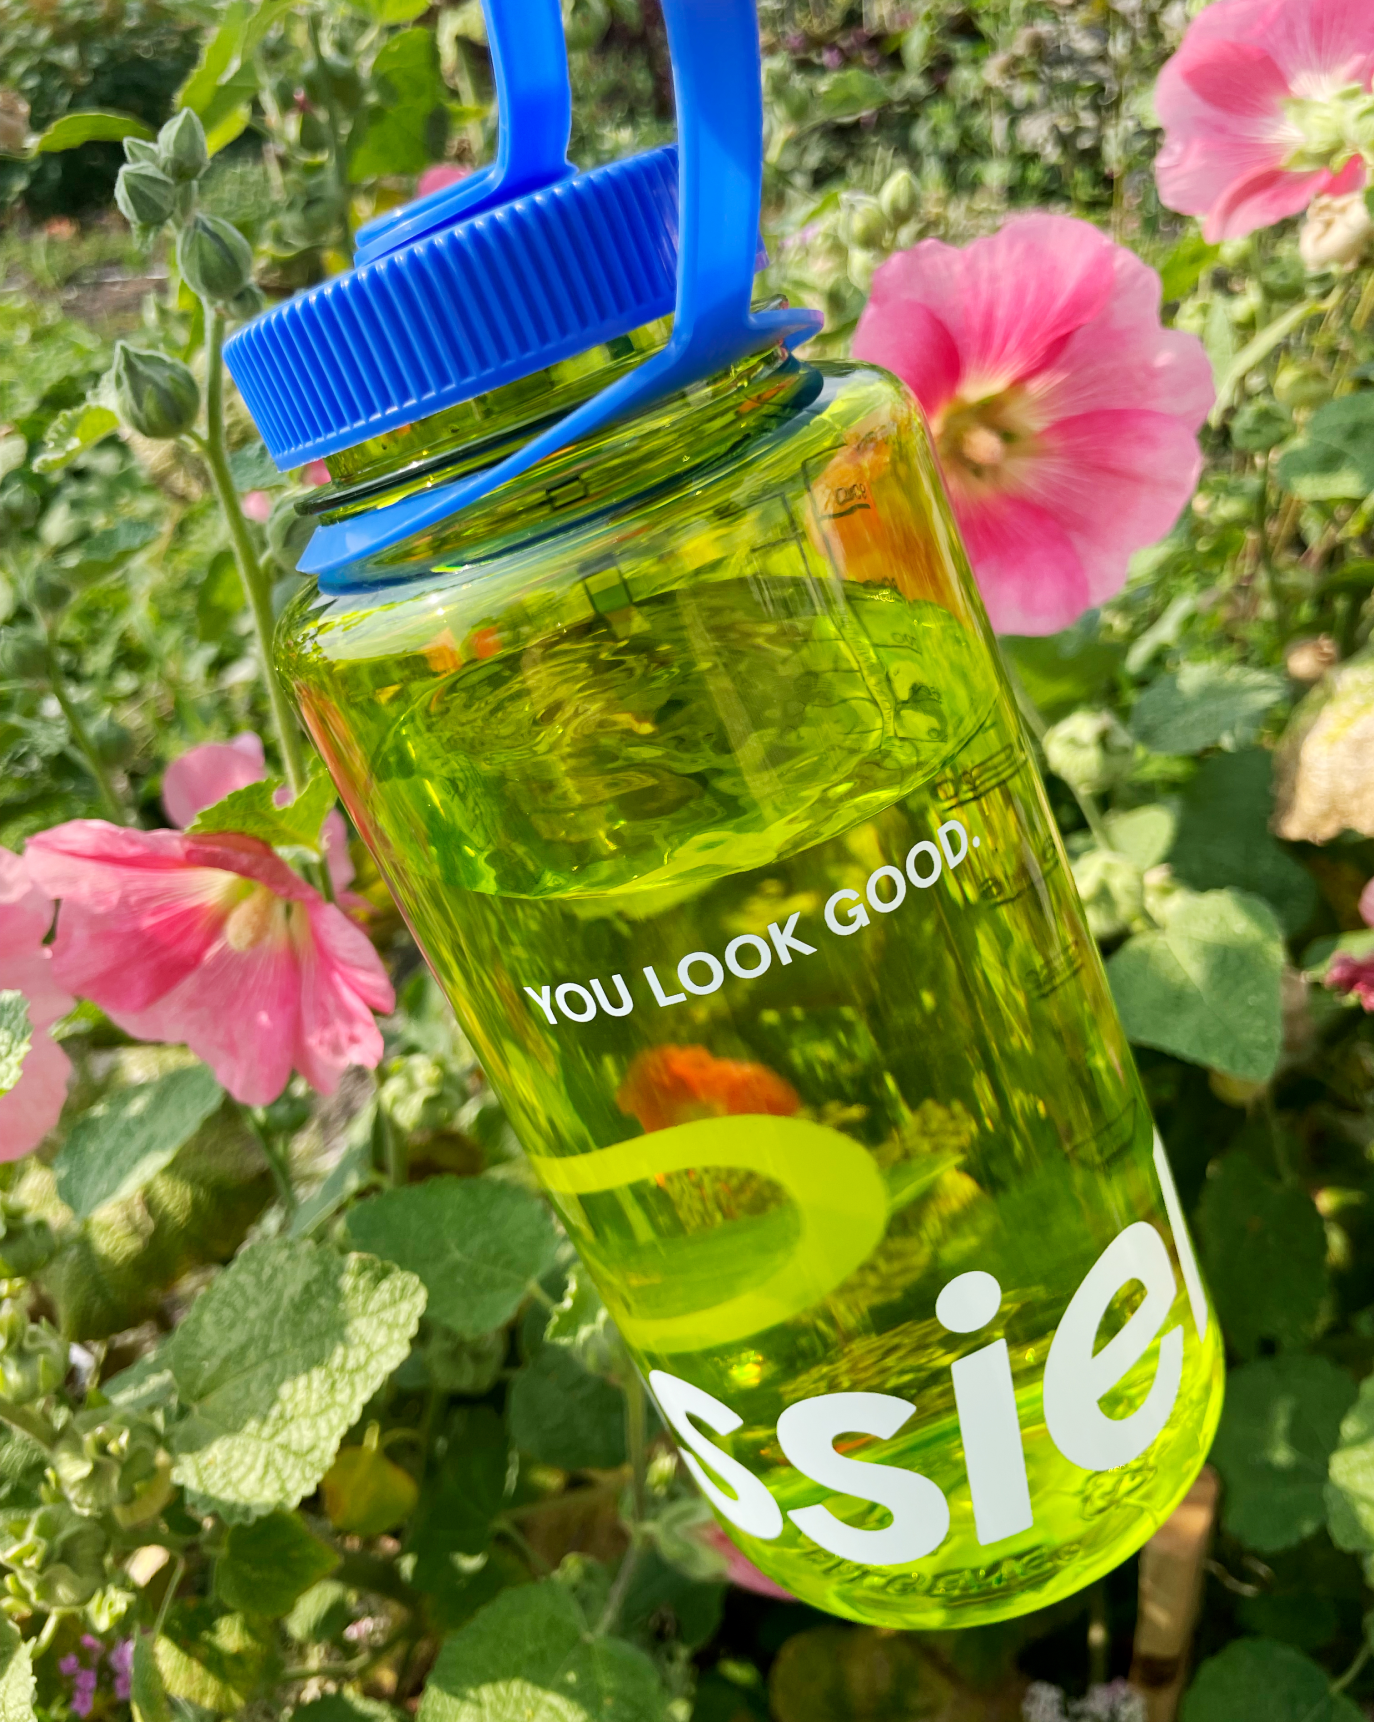 GLOSSYBOX Reusable Water Bottle